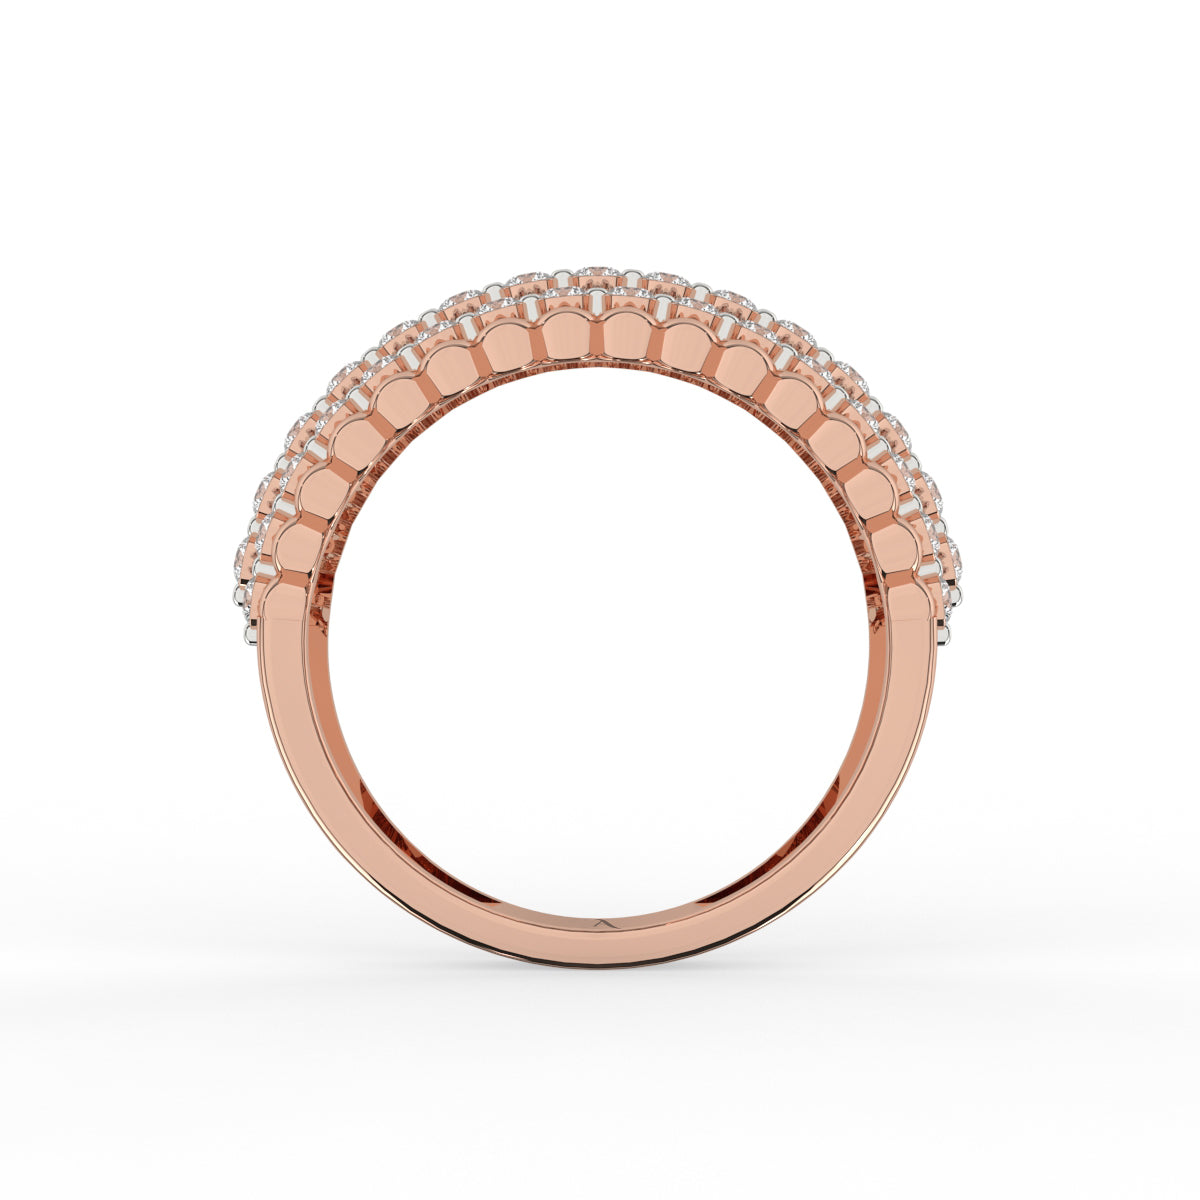 Designer bubble diamond ring